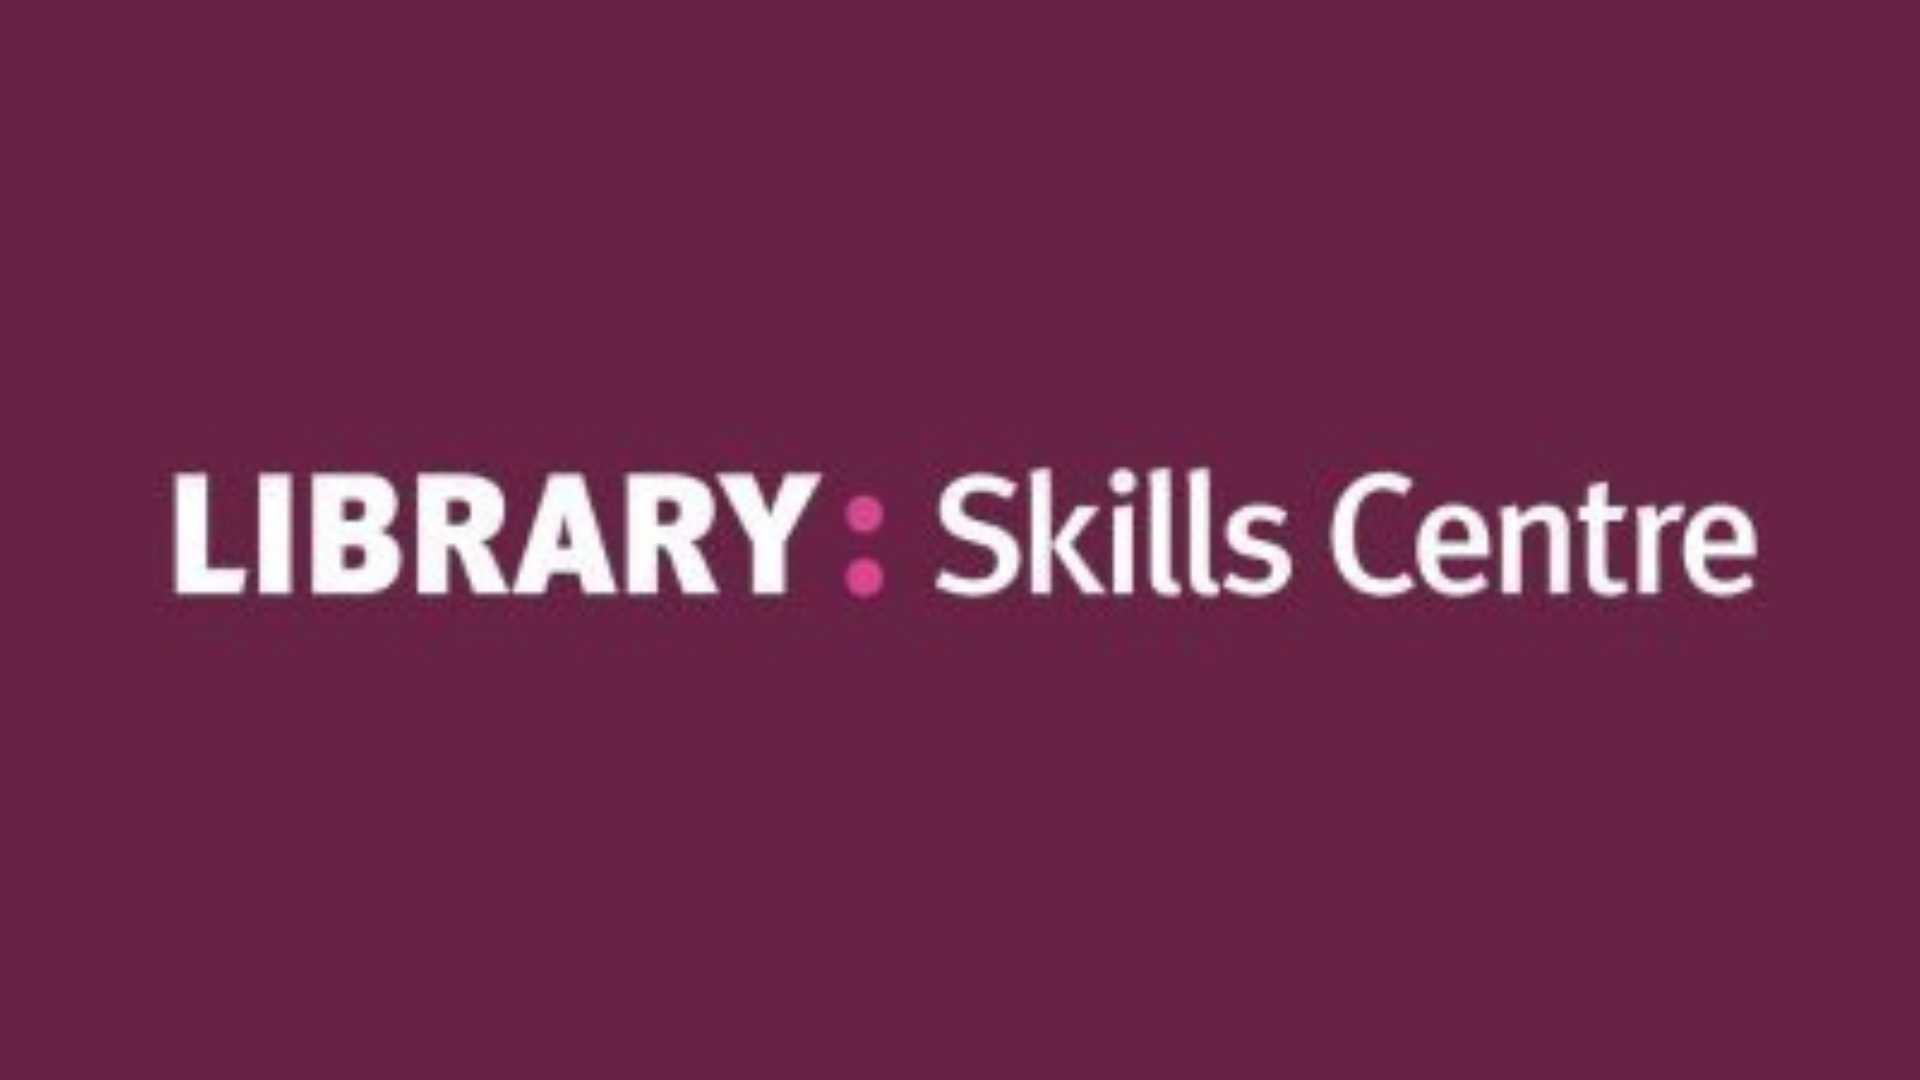 Library: Skills Centre logo